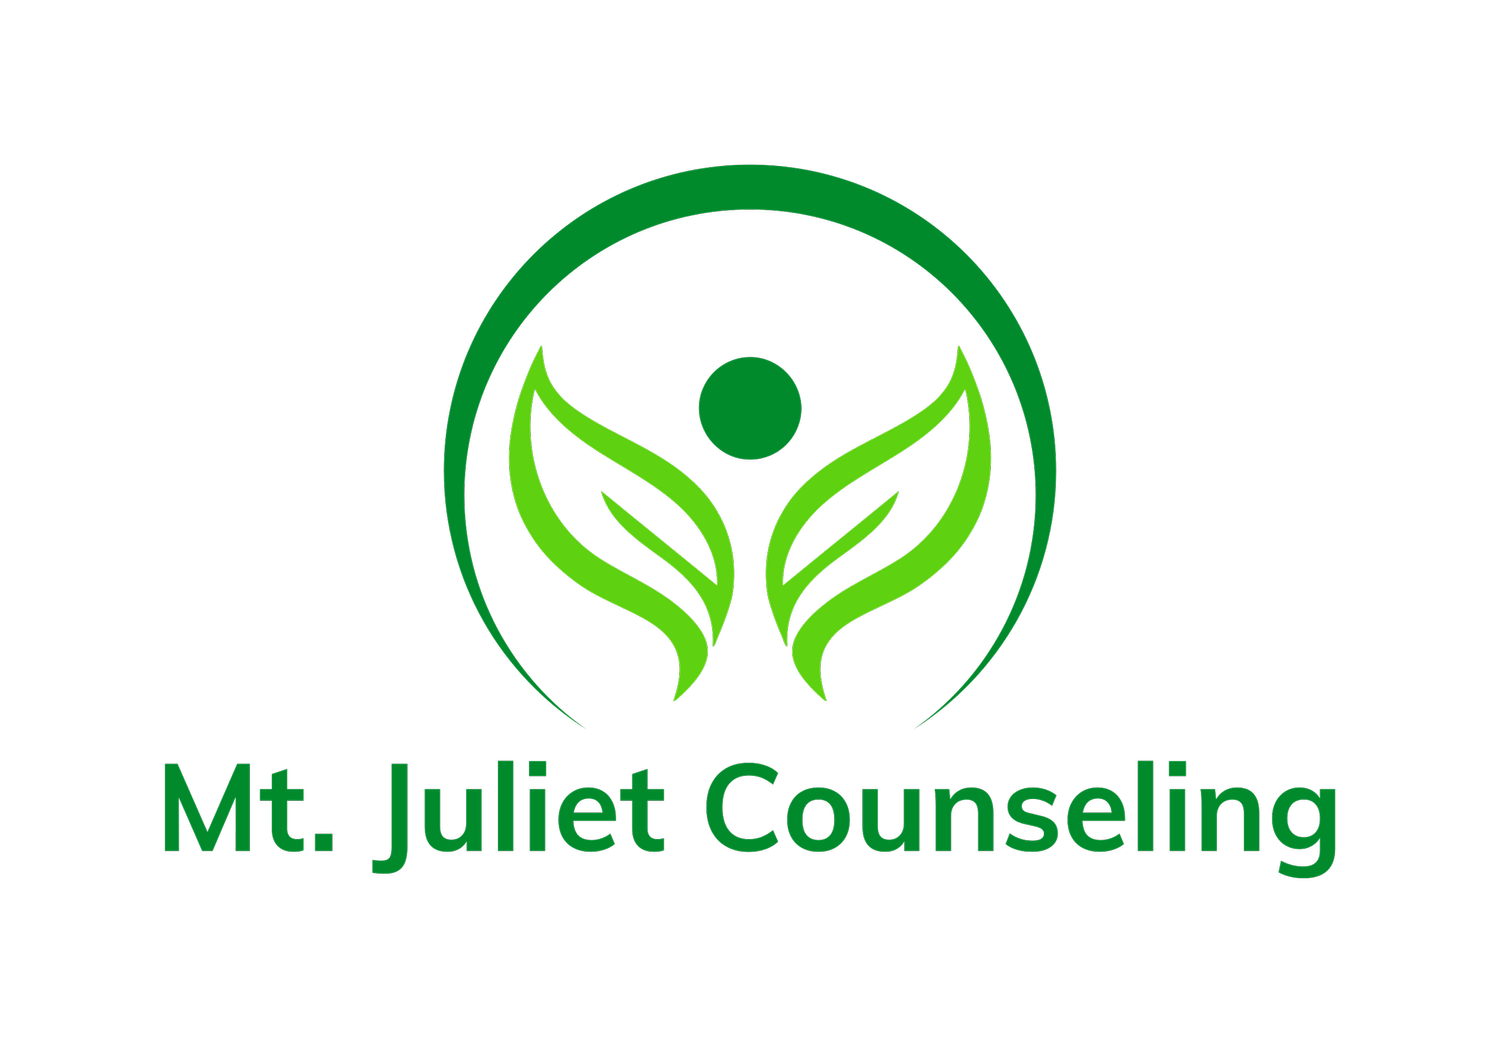 Mt. Juliet Counseling